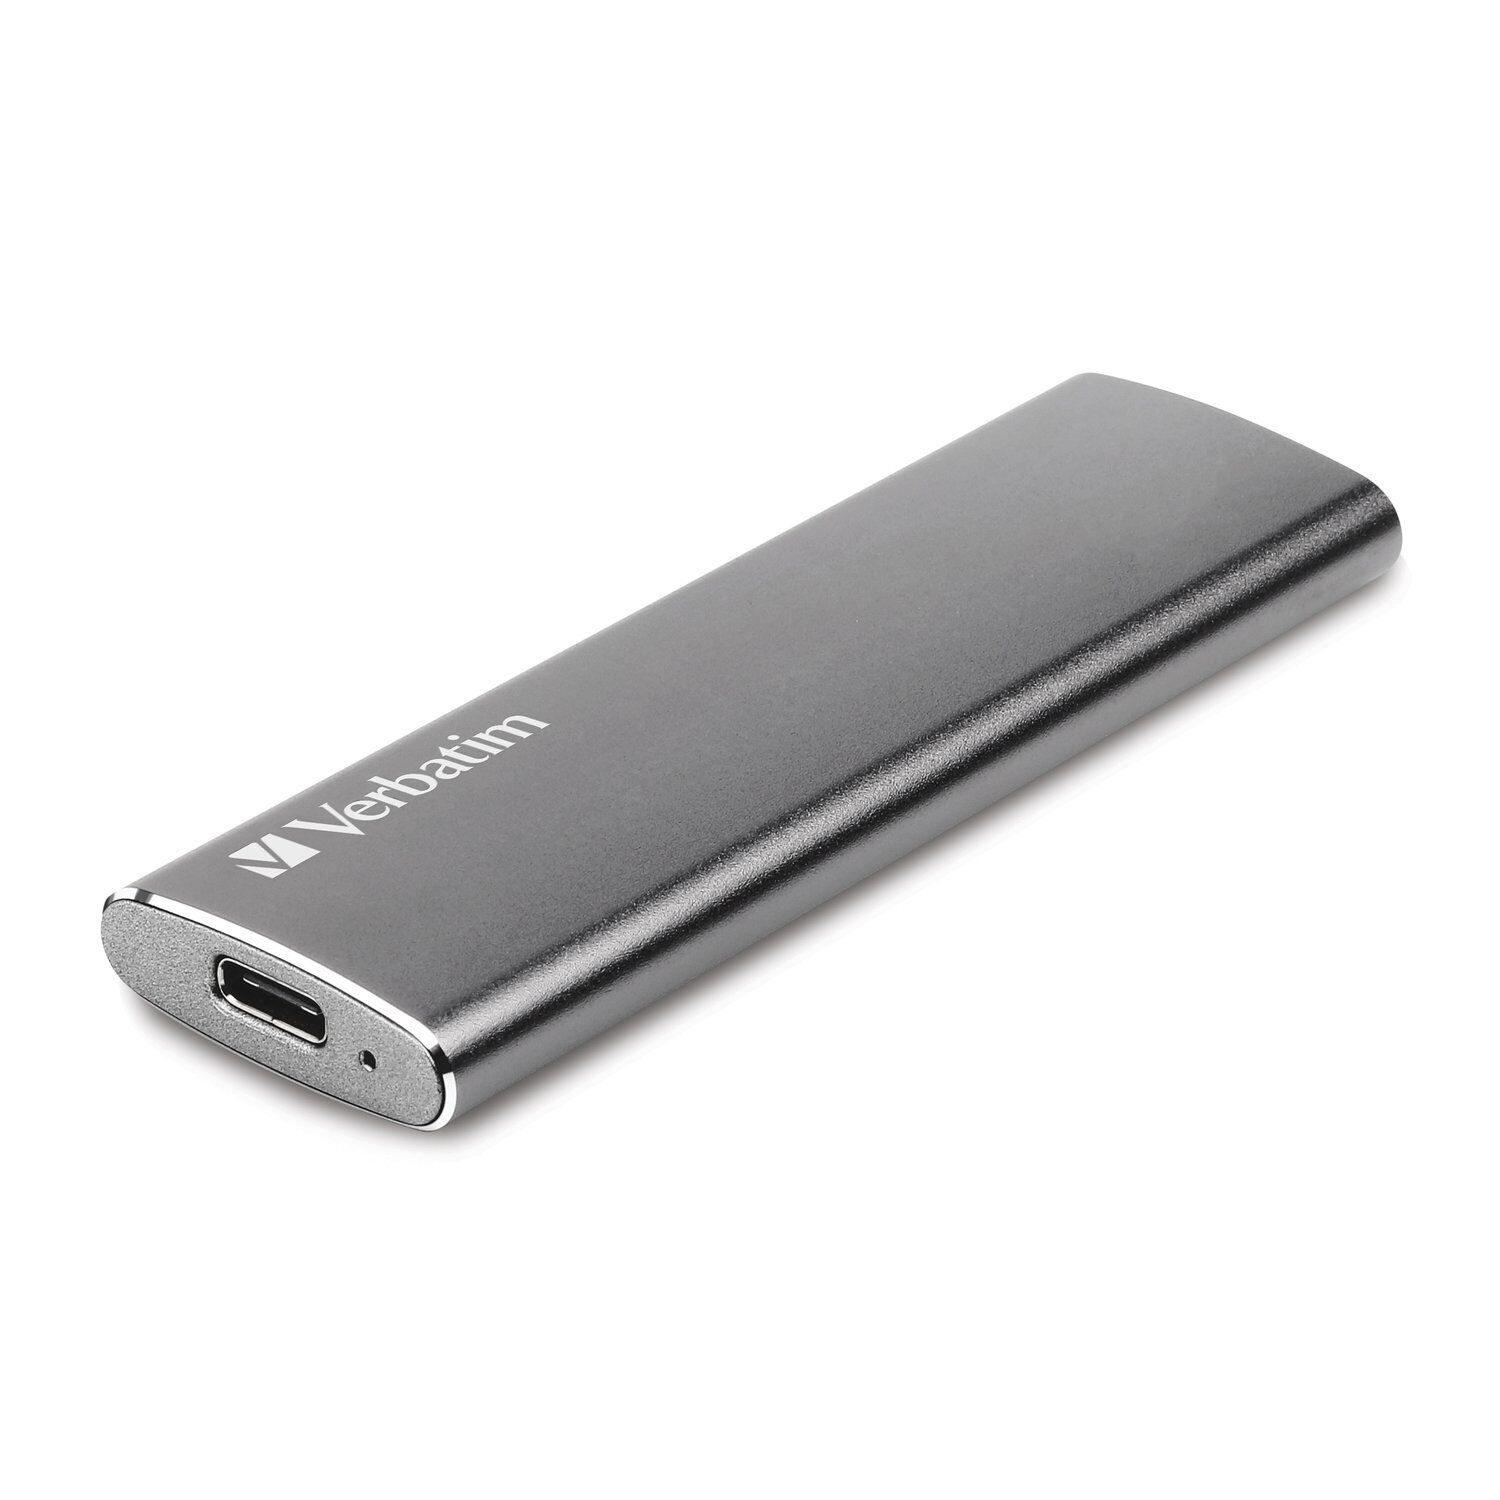 Verbatim 480GB Vx500 External SSD, USB 3.1 Gen 2 - Graphite (47443)